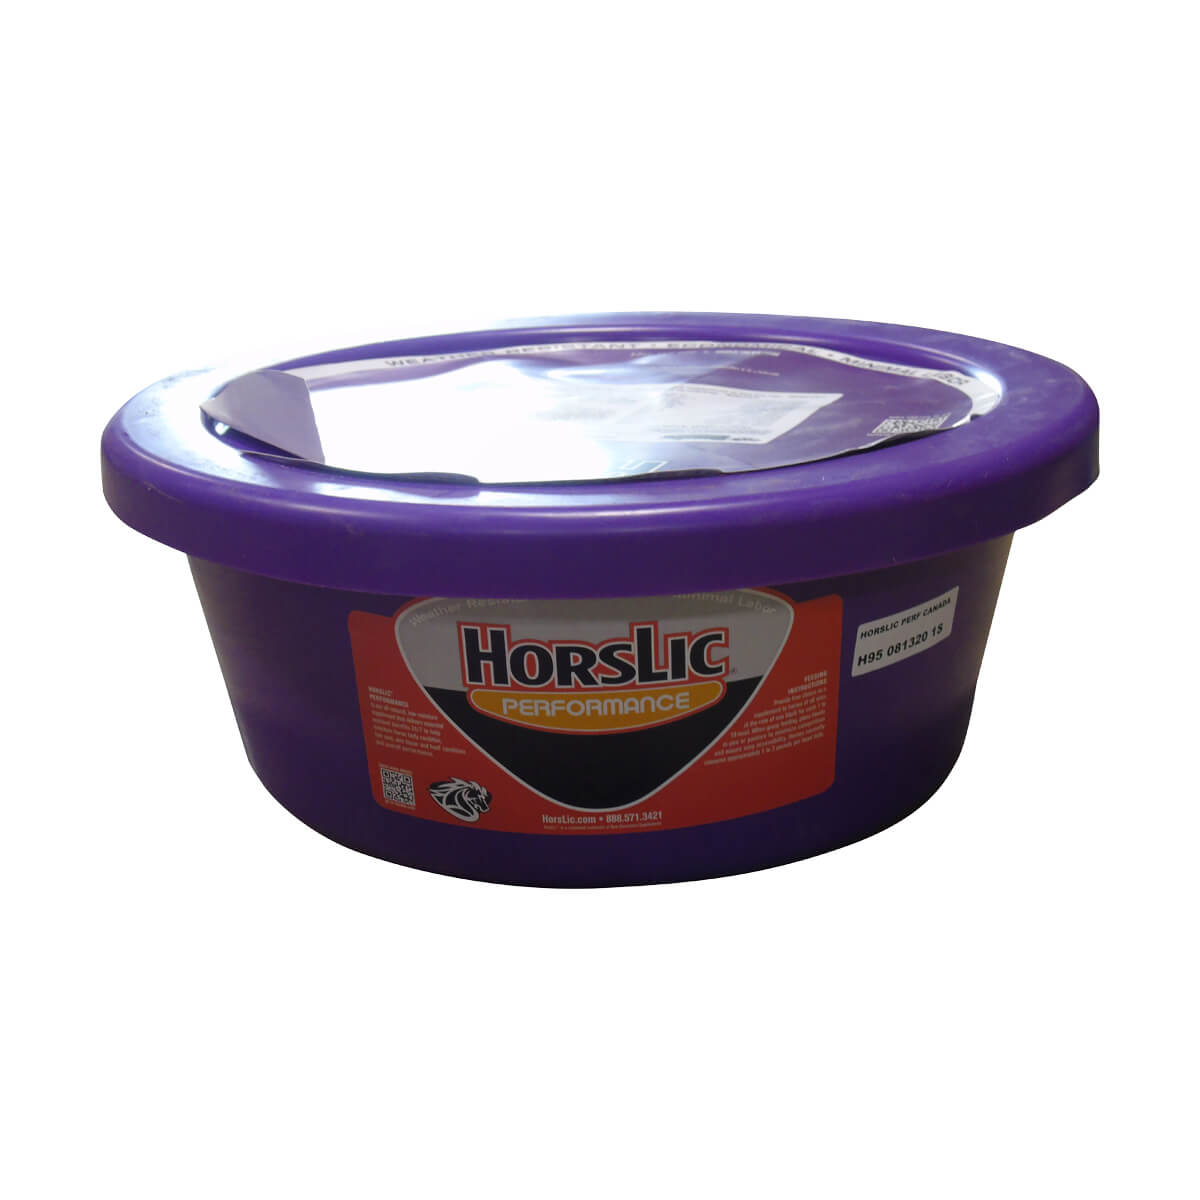 HorsLic® Performance Tubs  - 60 lb